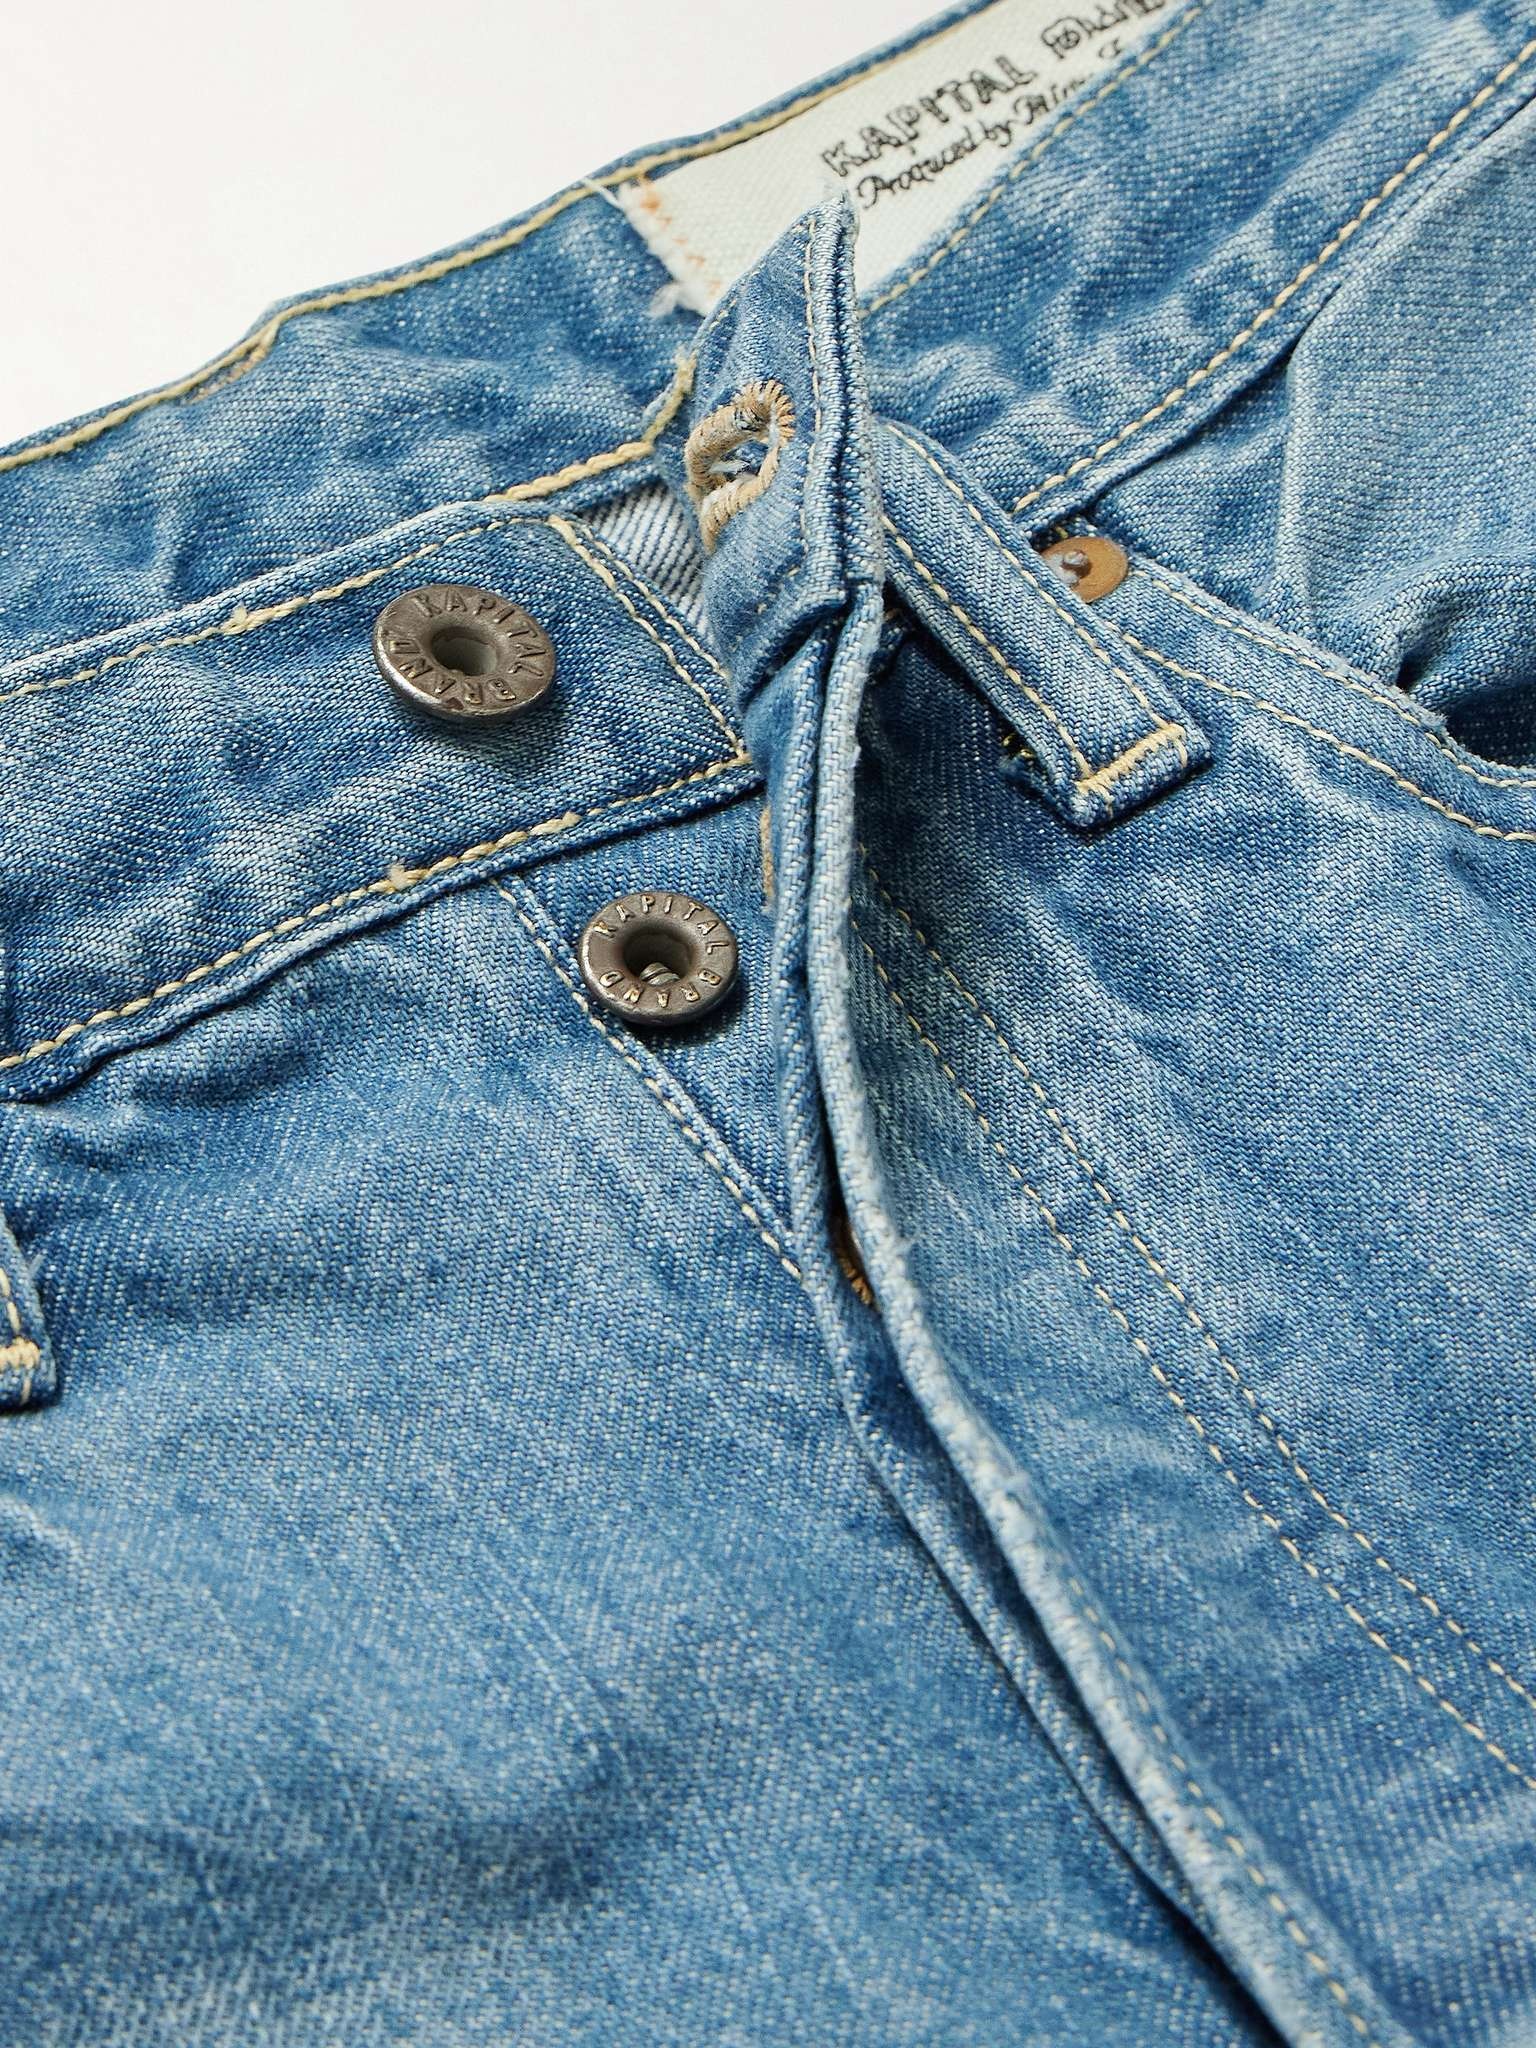 KAPITAL - Slim-Fit Distressed Denim Jeans - Men - Indigo KAPITAL